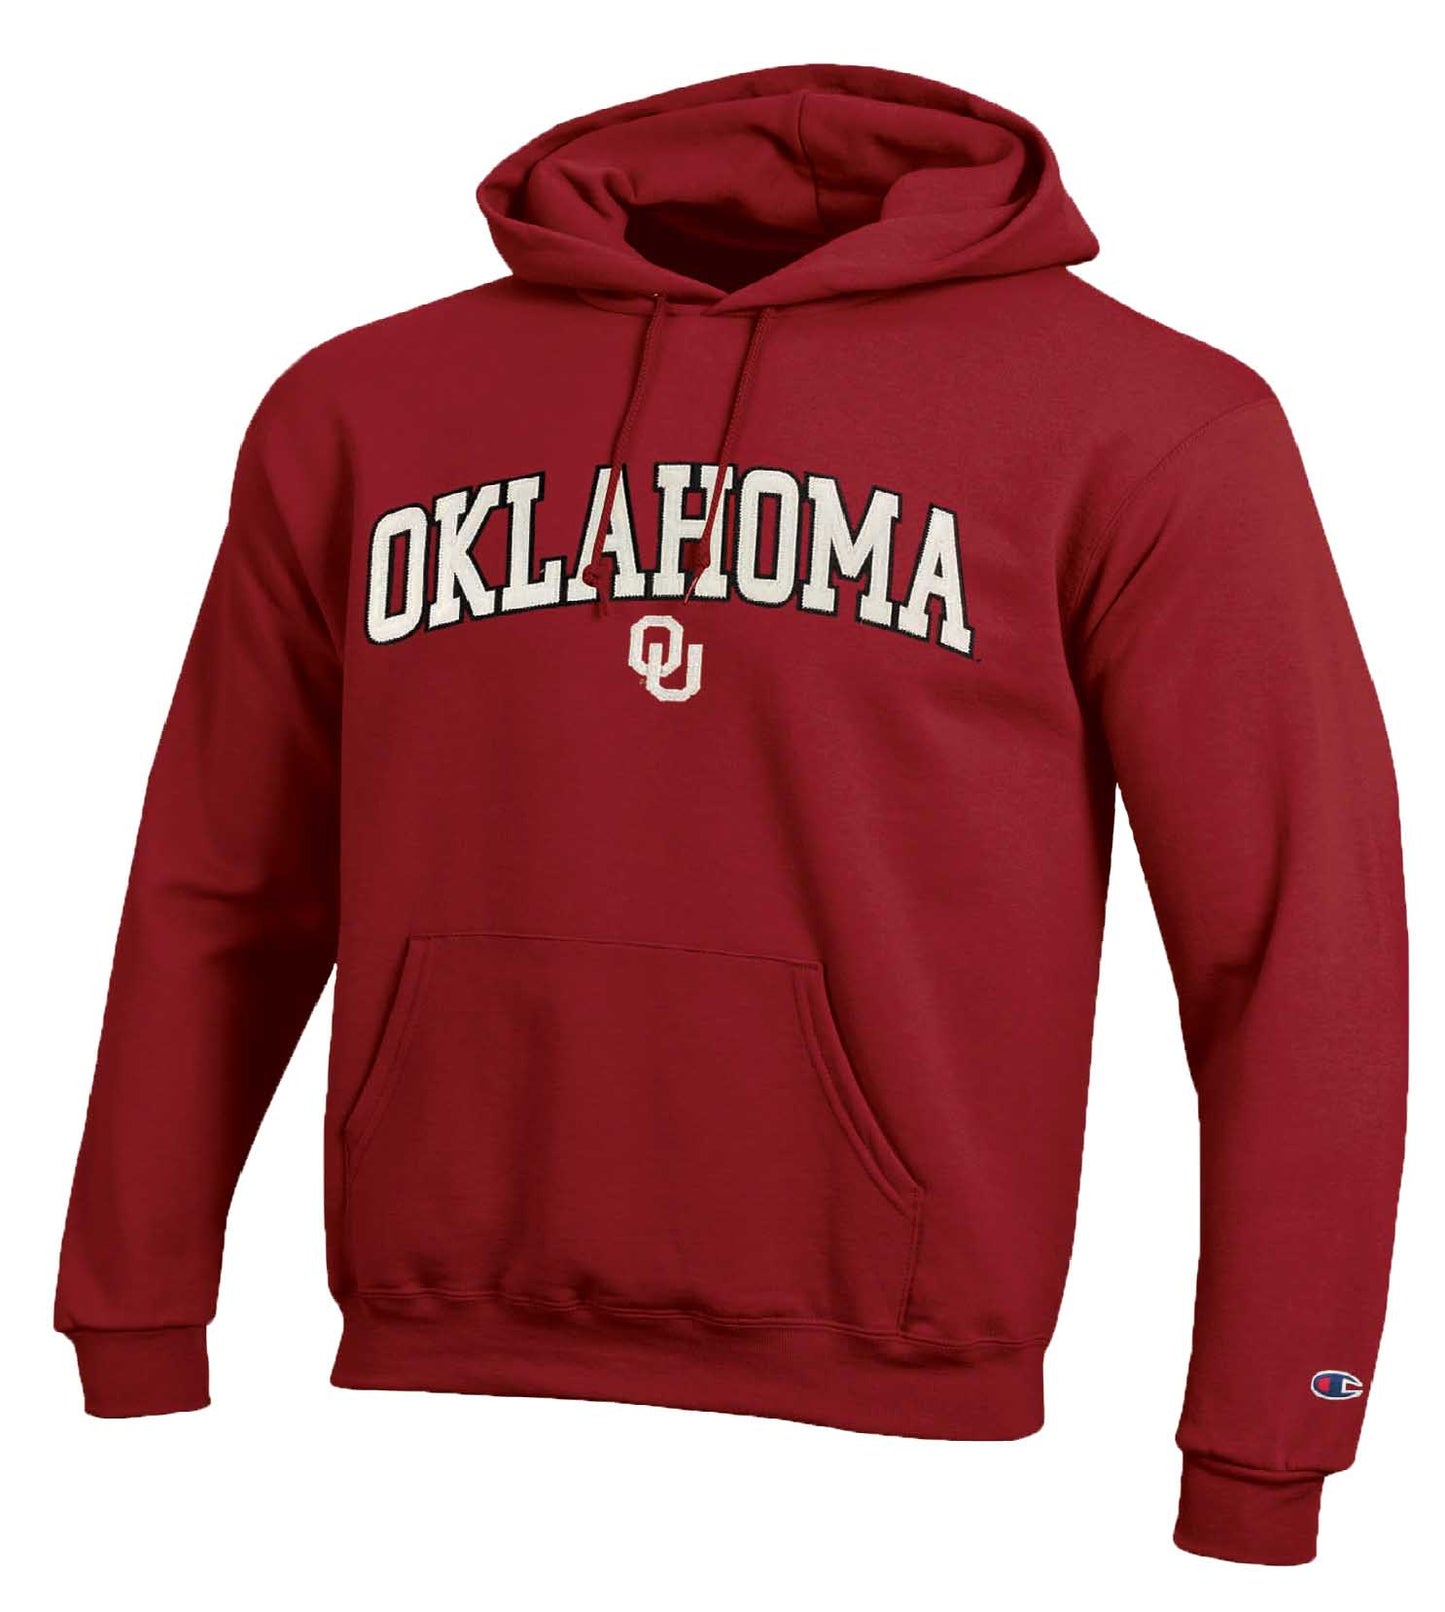 Oklahoma Sooners Champion Adult Tackle Twill Hooded Sweatshirt - Cardinal